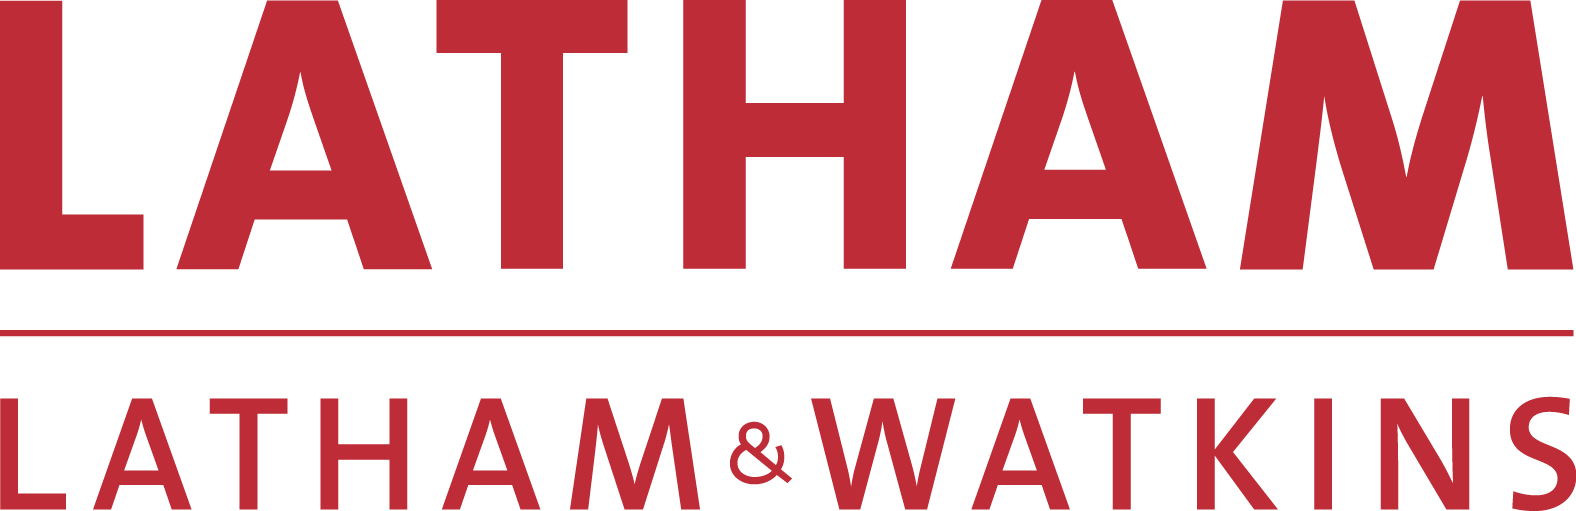 https://markushornig.com/wp-content/uploads/2022/08/sponsor-logo-latham-watkins-1.webp